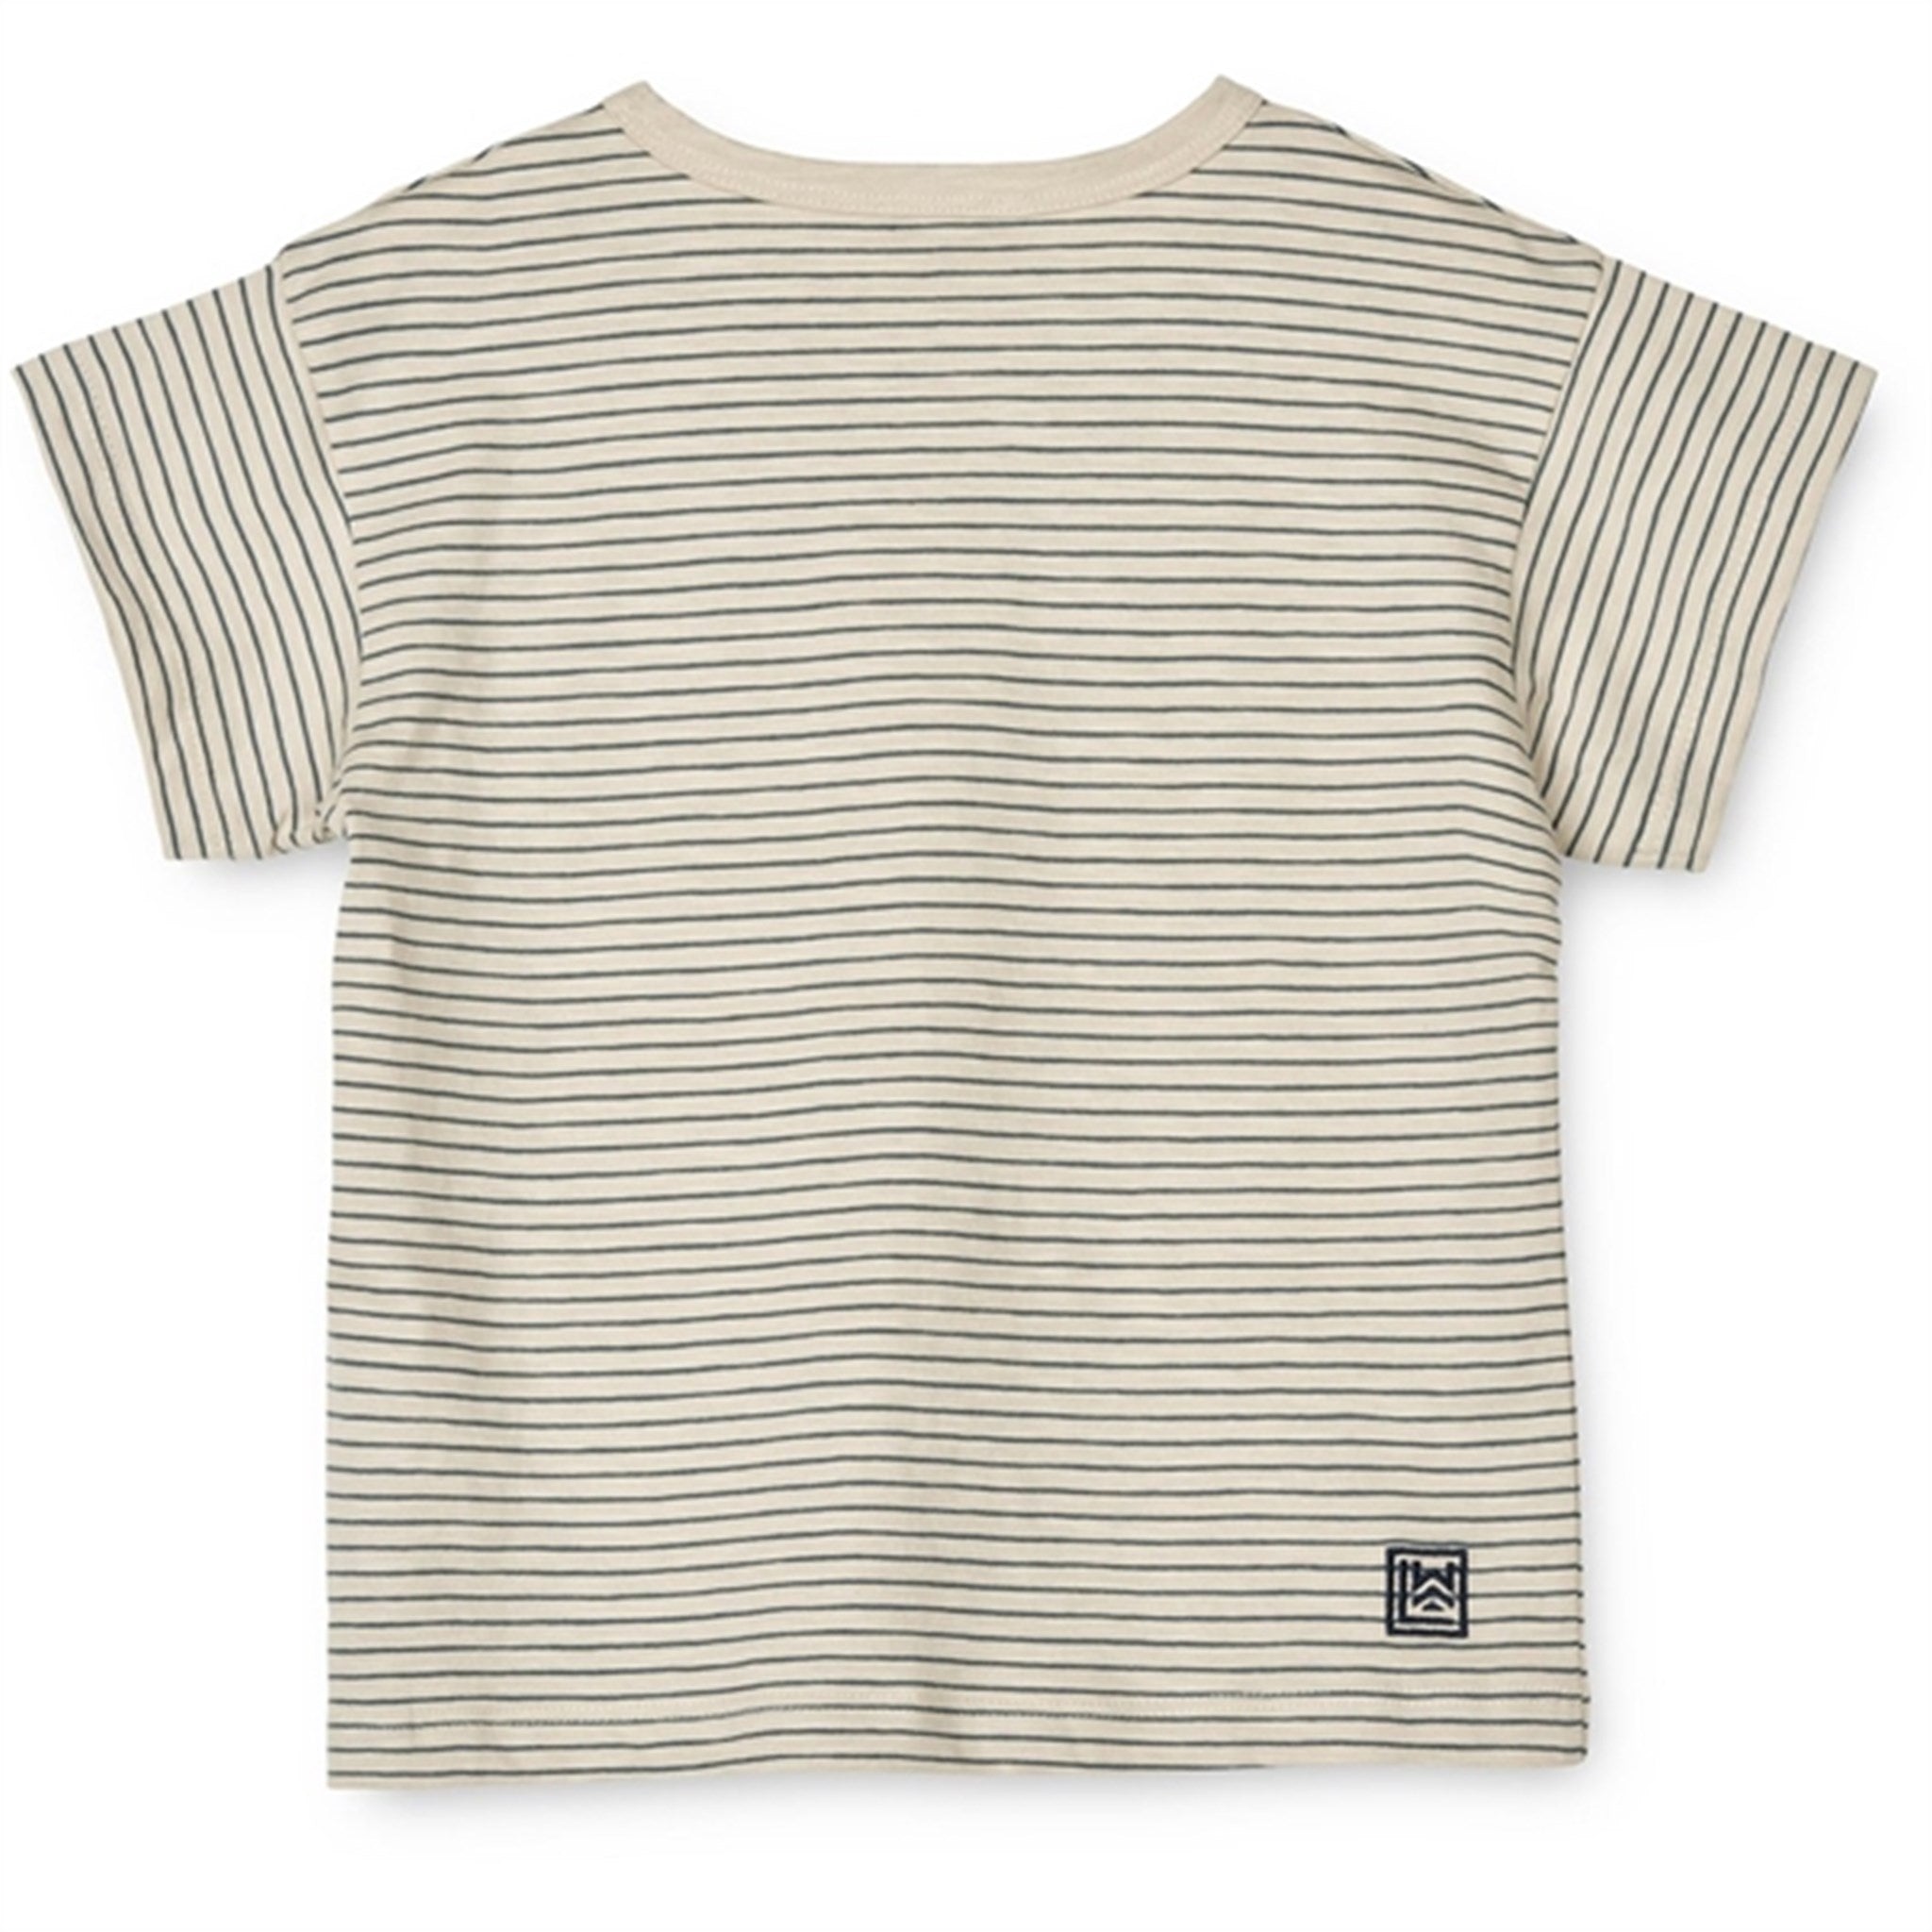 Liewood Y/D Stripes Whale Blue/Sandy Dodoma Stripe T-shirt 2